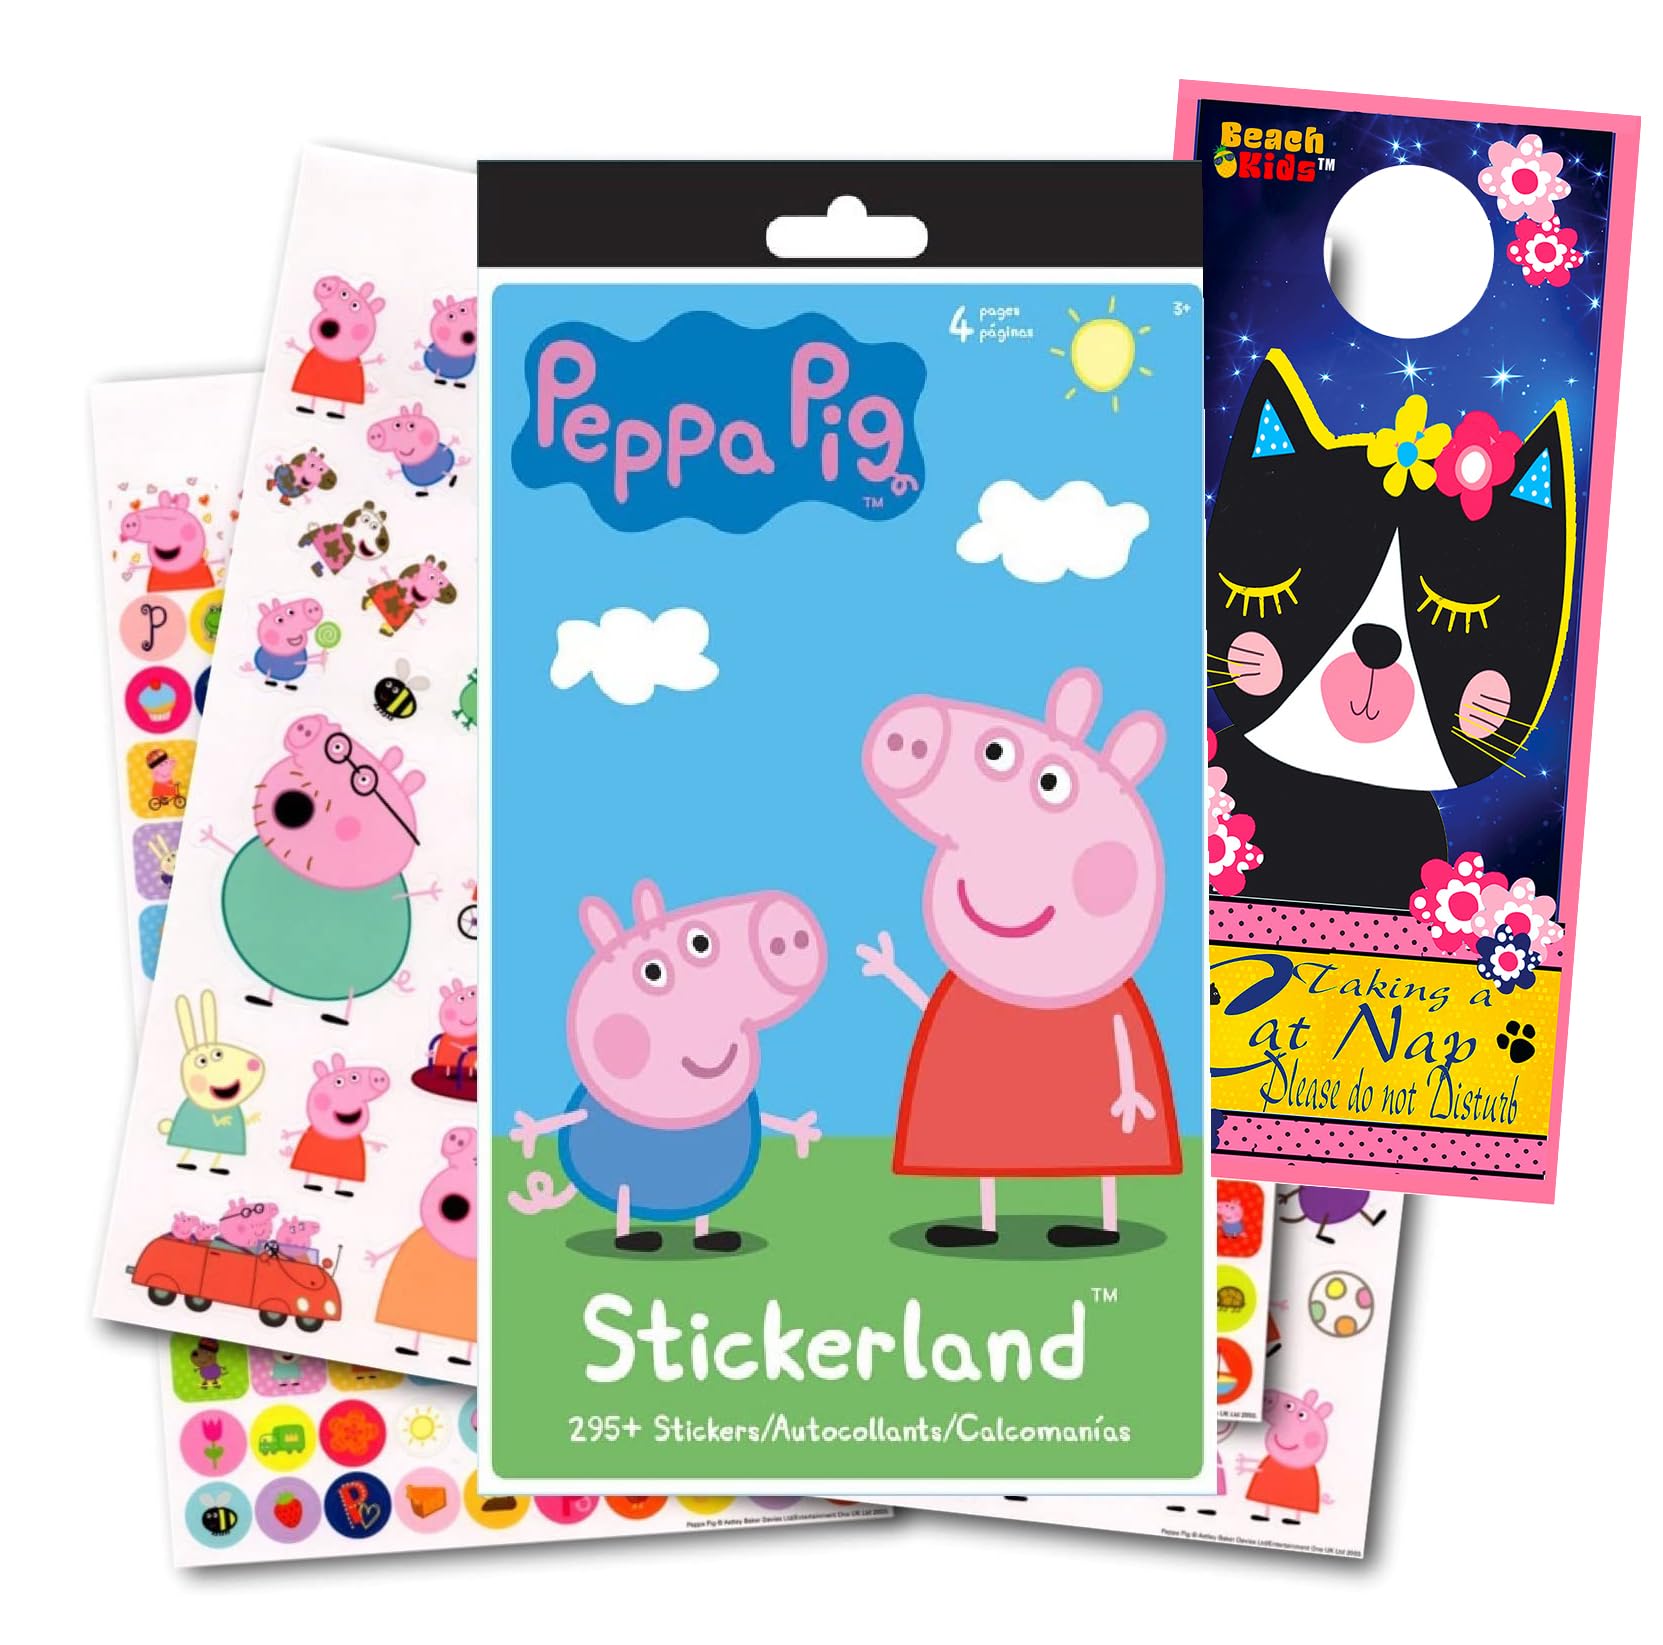 Stickerland Peppa Pig Stickers - 295 Stickers